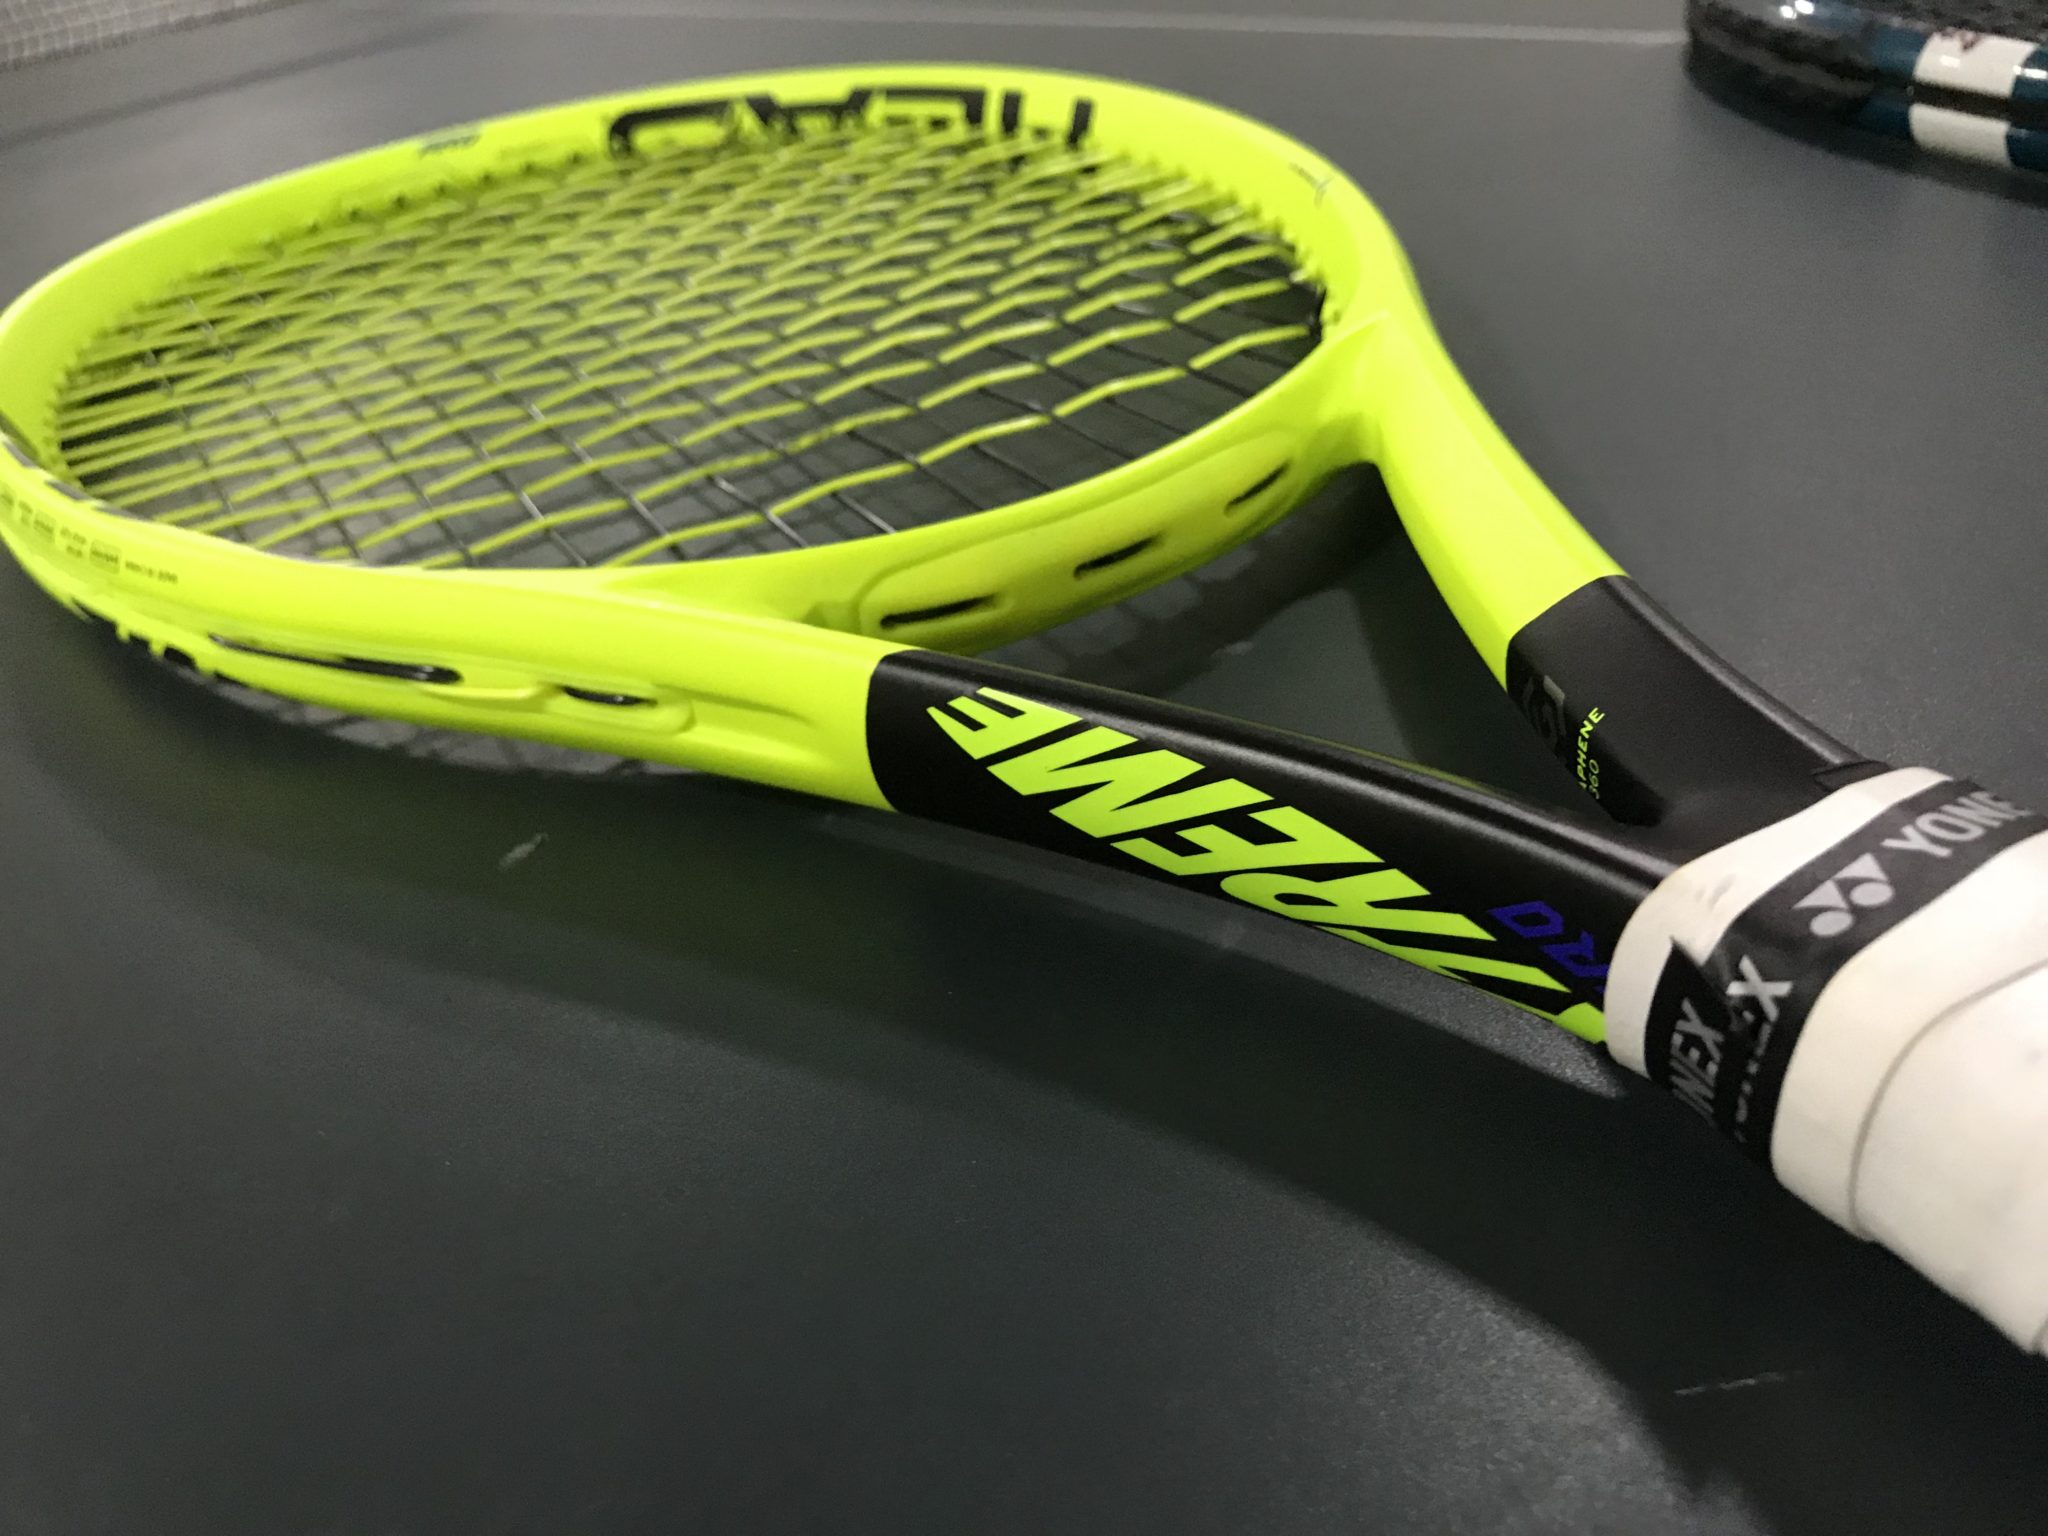 Top Ten Tennis Racquets Right Now - The best tennis rackets